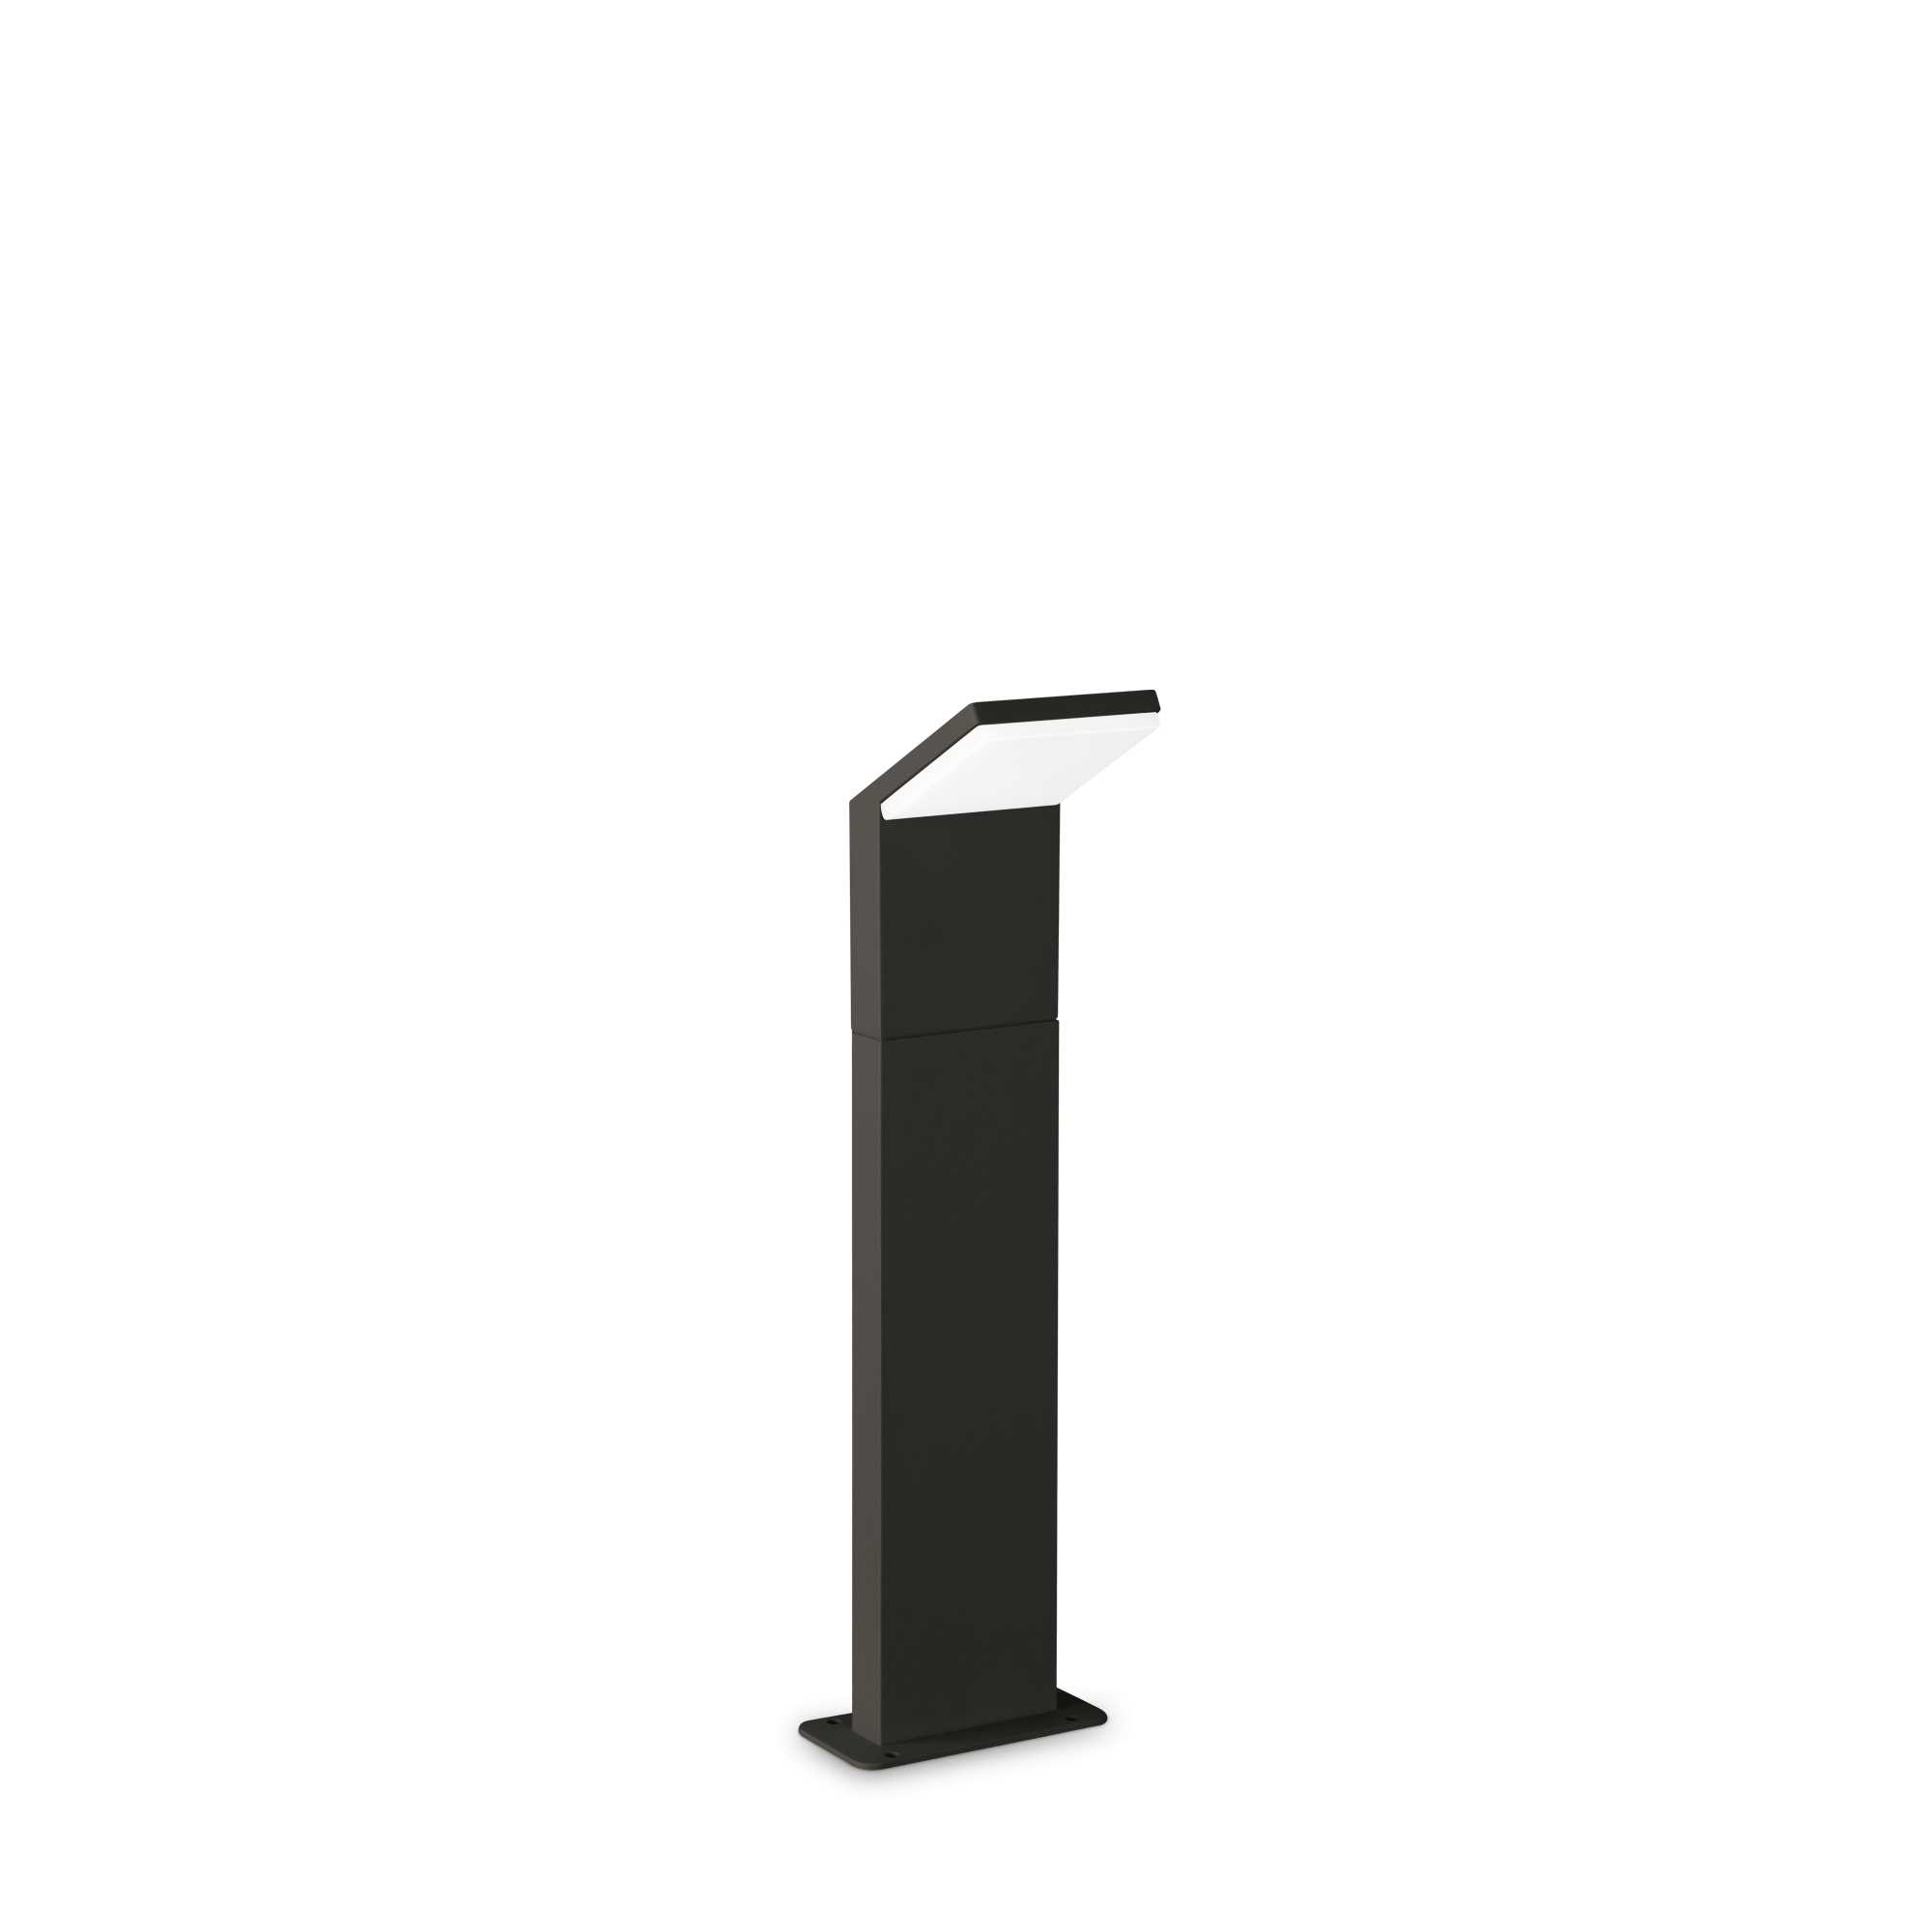 AD hotelska oprema Vanjska podna lampa Style pt h050 (4000k)- Crne boje slika proizvoda